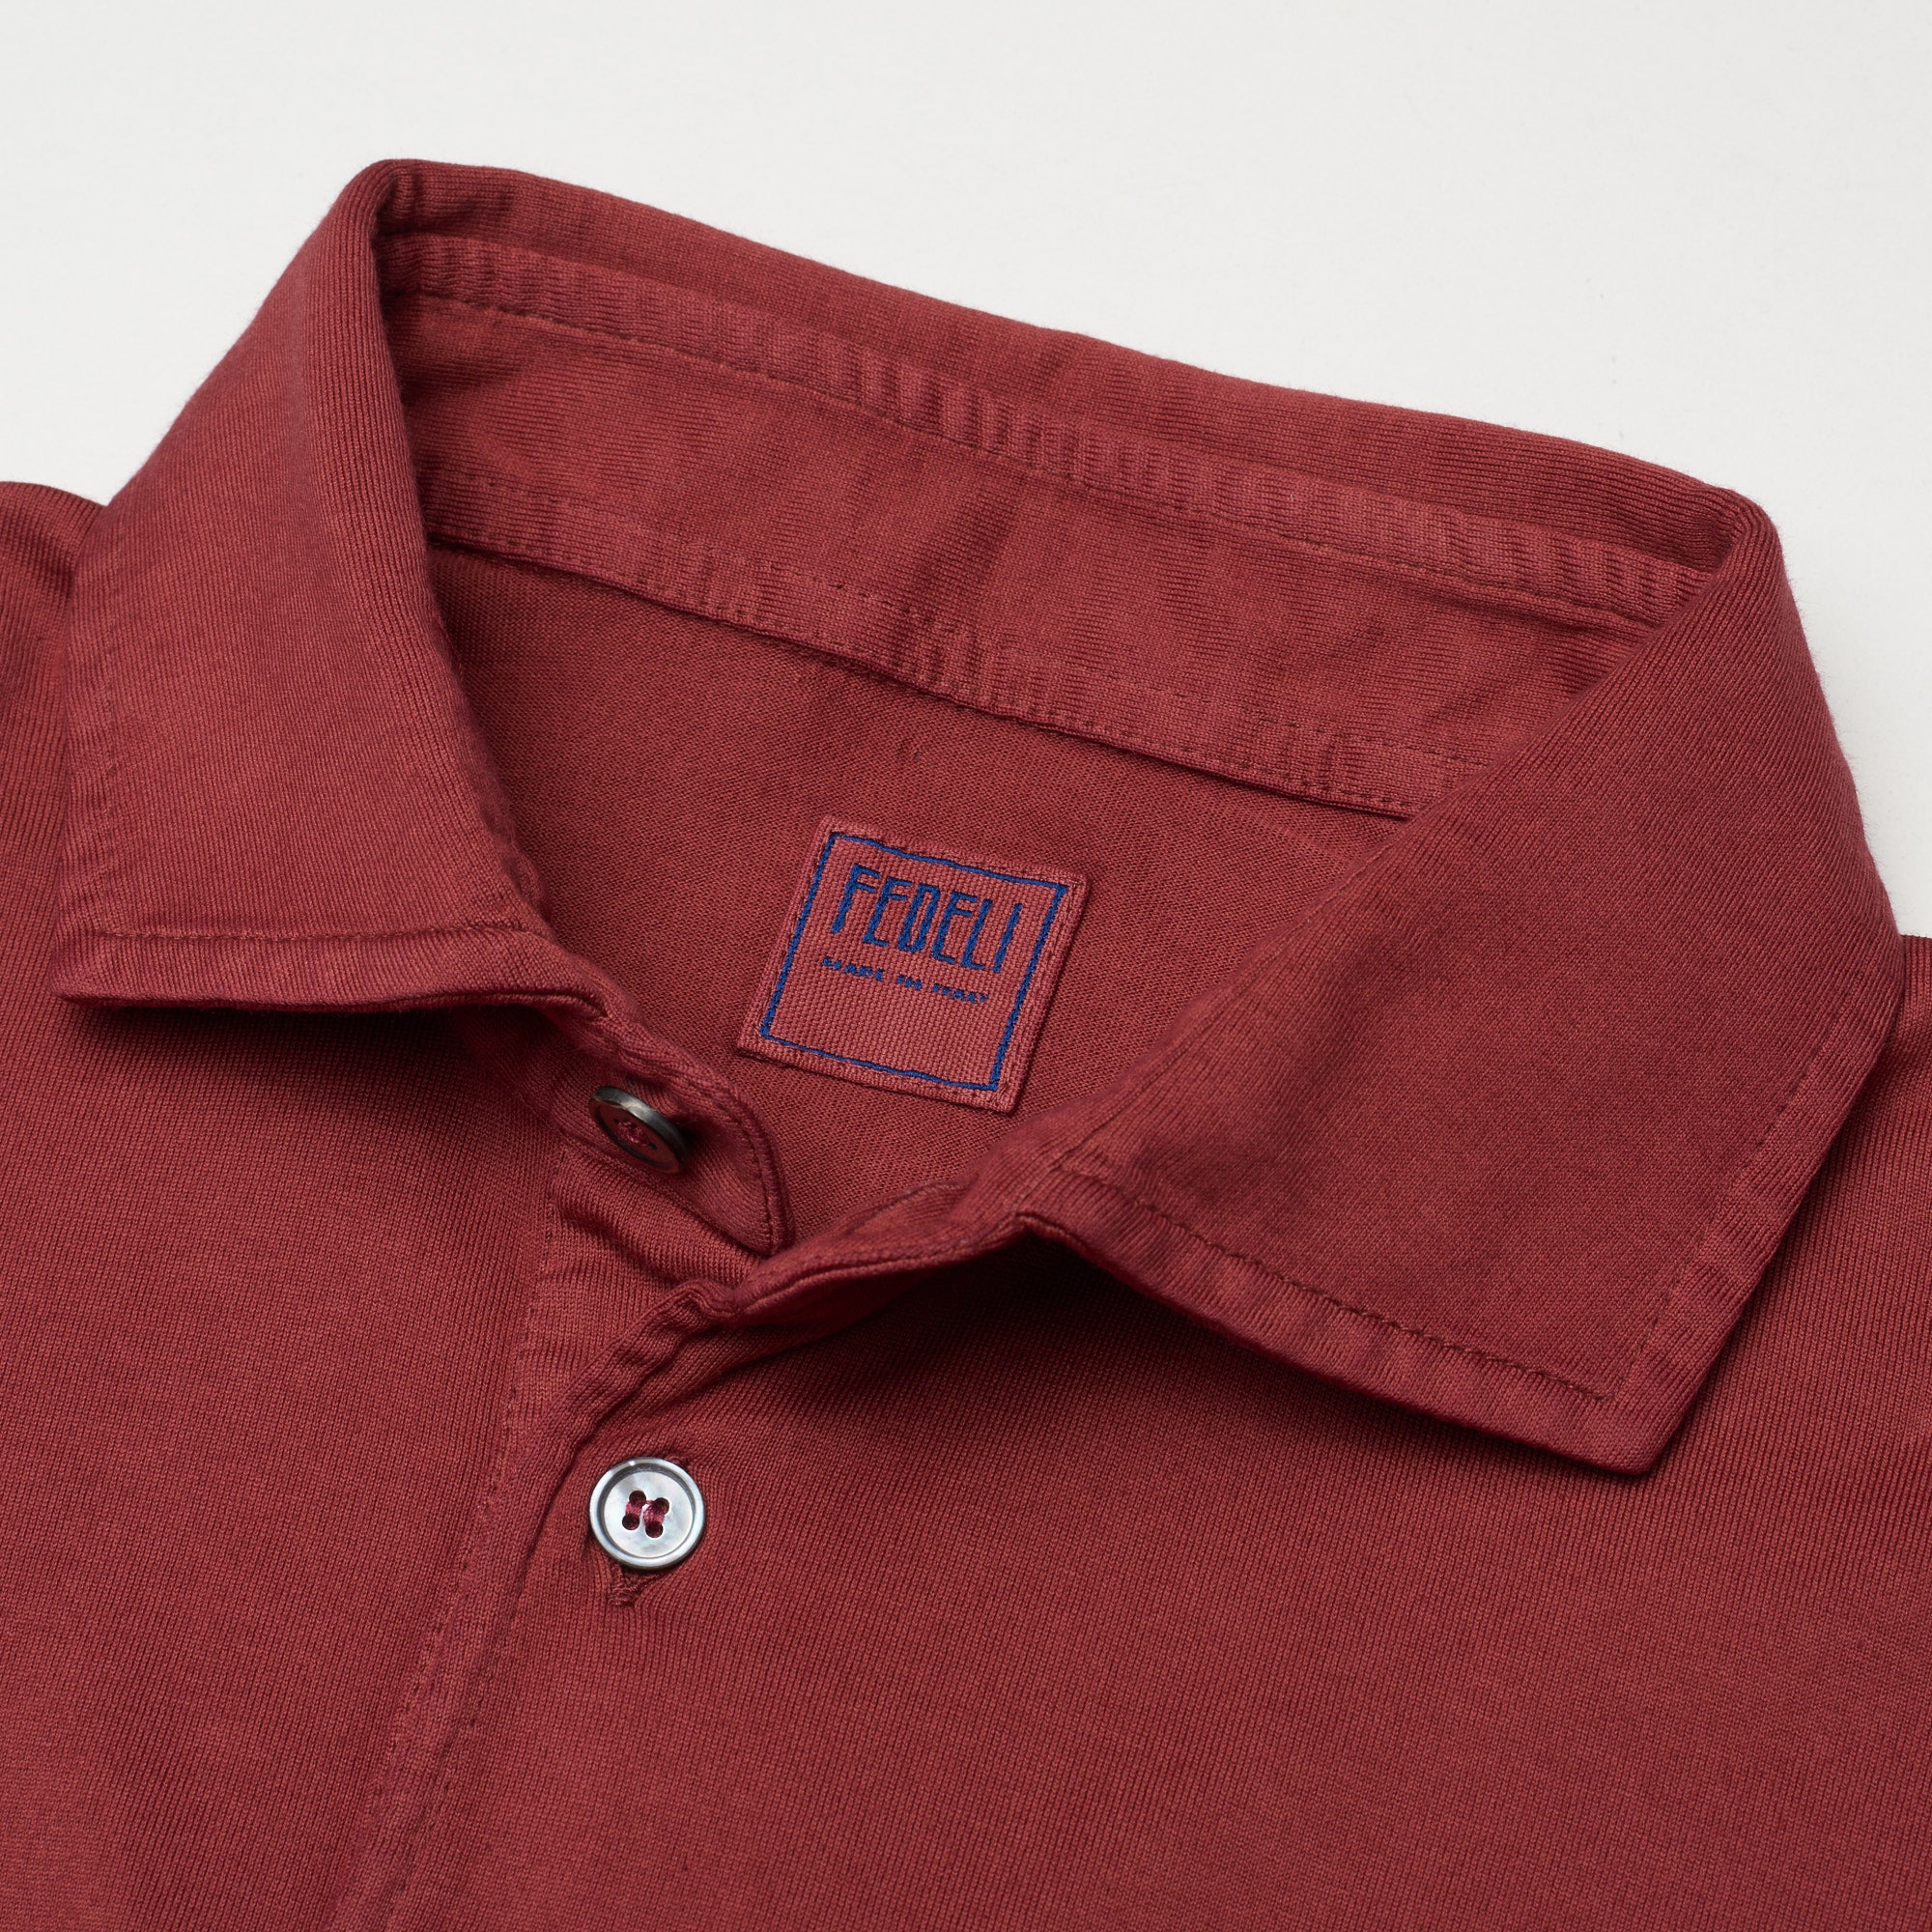 FEDELI "Zero" Brick Red Cotton Jersey Long Sleeve Polo Shirt NEW FEDELI